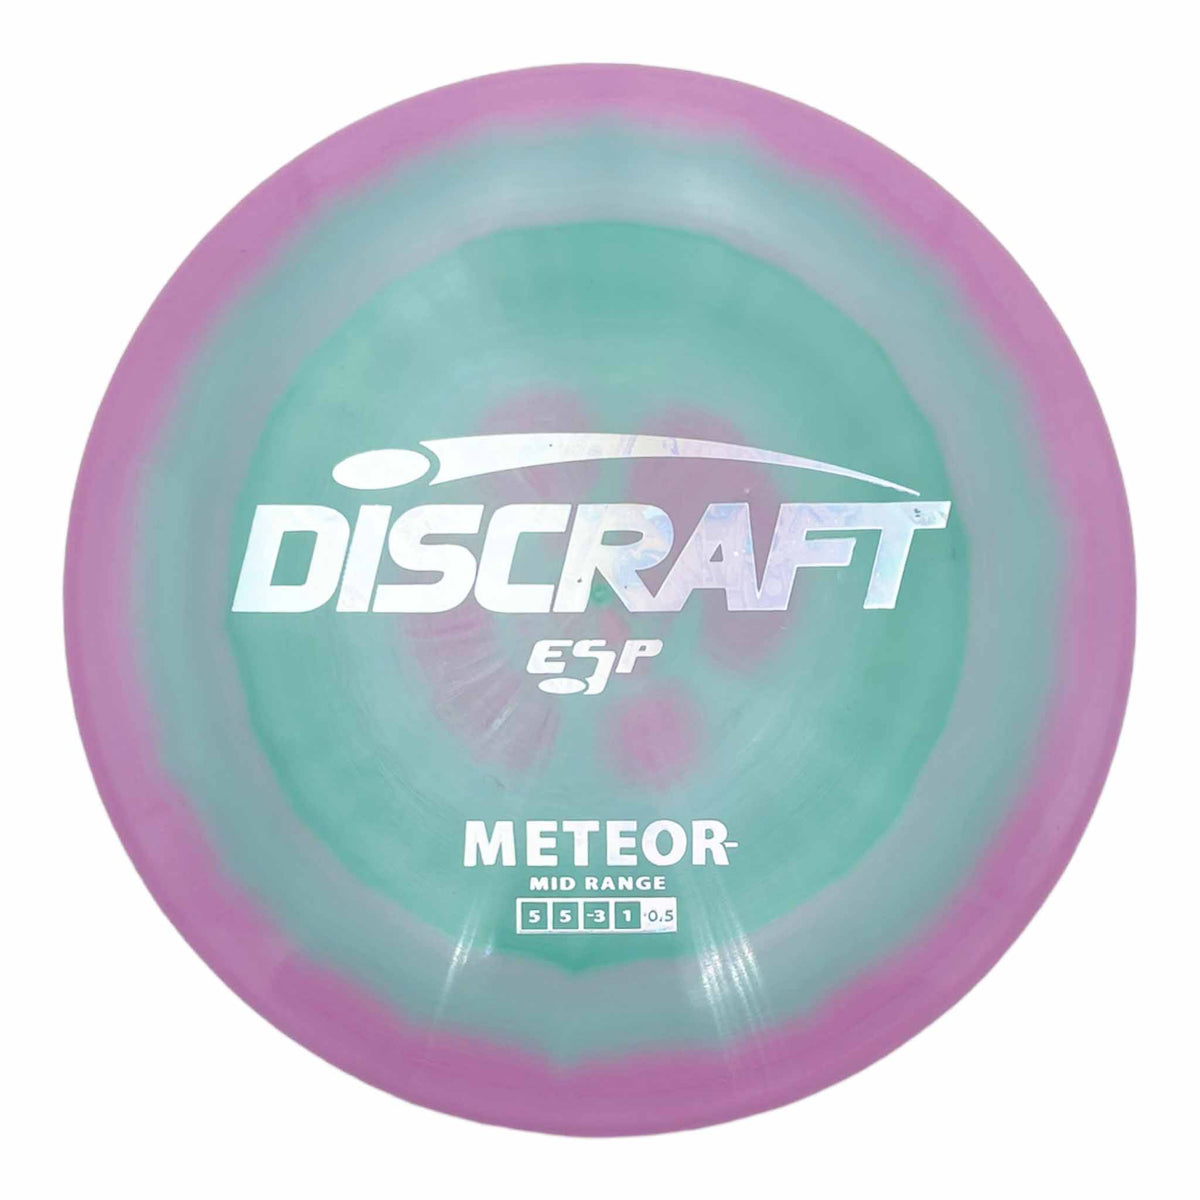 Discraft ESP Meteor midrange - Pink / Green